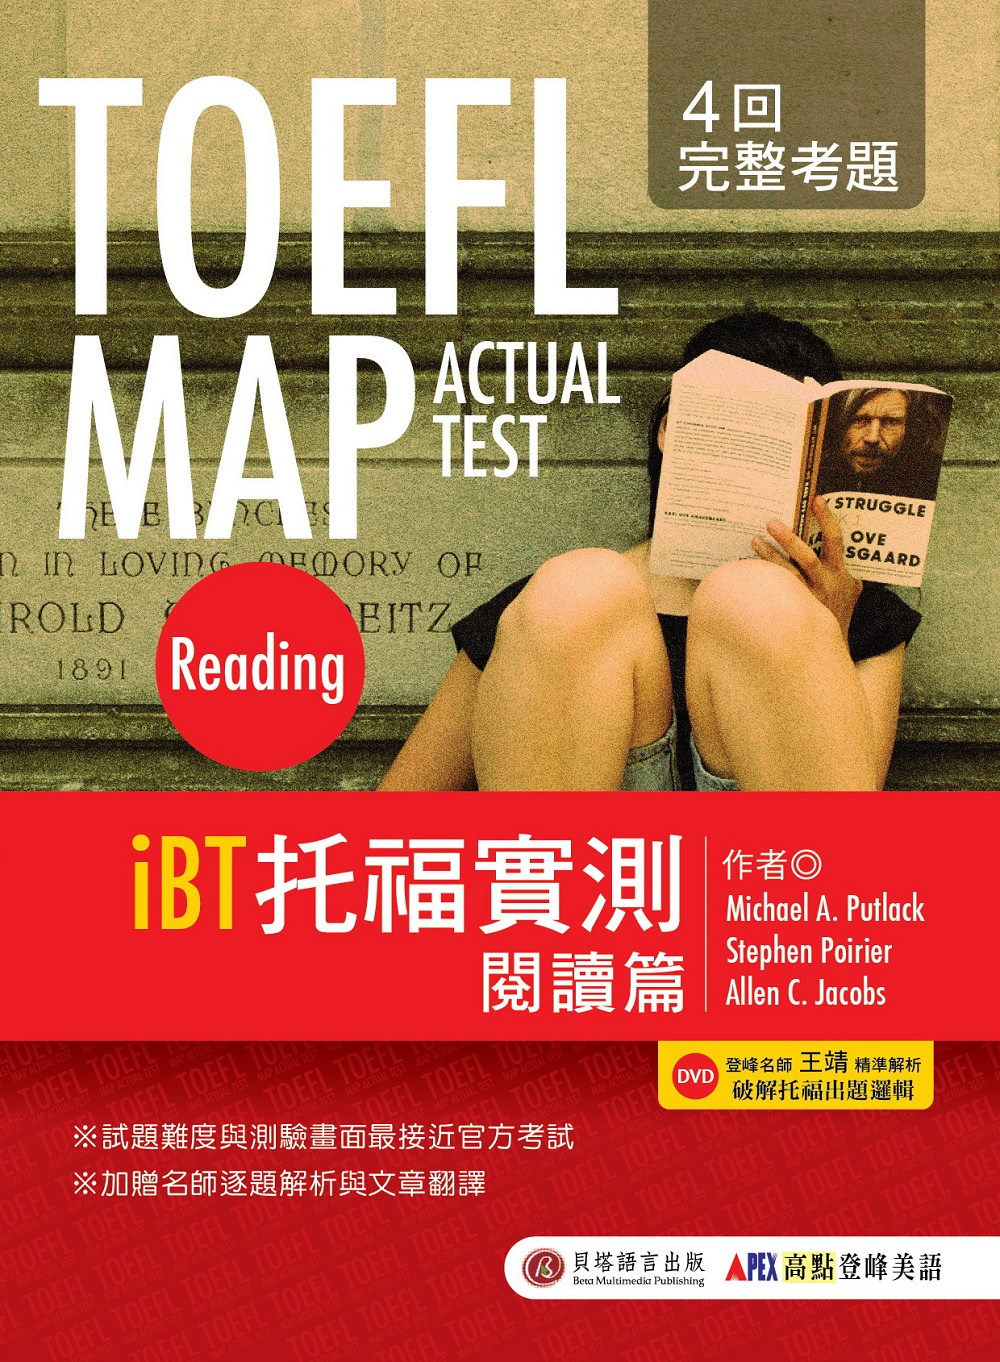 TOEFL MAP ACTUAL TEST：Reading  iBT托福實測 閱讀篇(1書+1DVD)